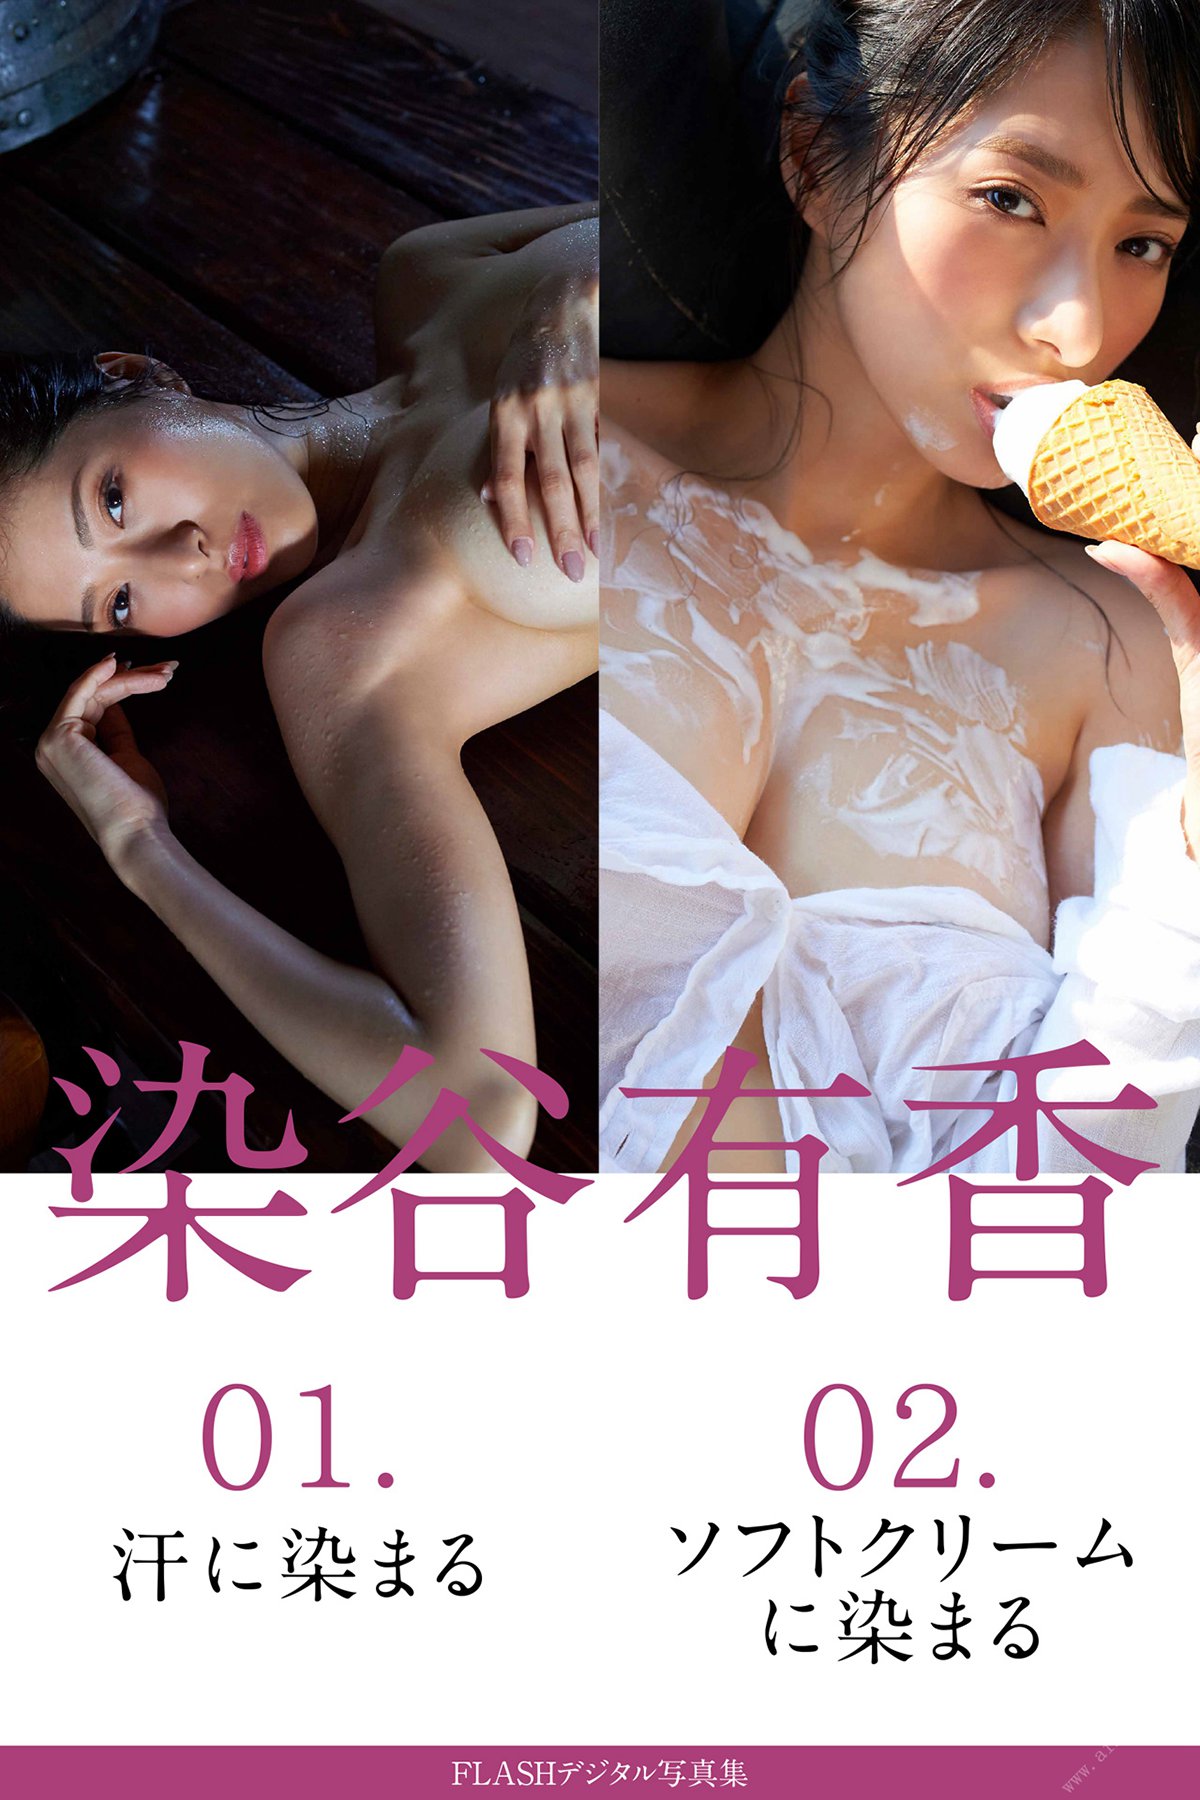 FLASH Photobook Yuka Someya 染谷有香 – 01 Dyed in sweat 02 Dyed in soft serve ice cream 2020-10-27